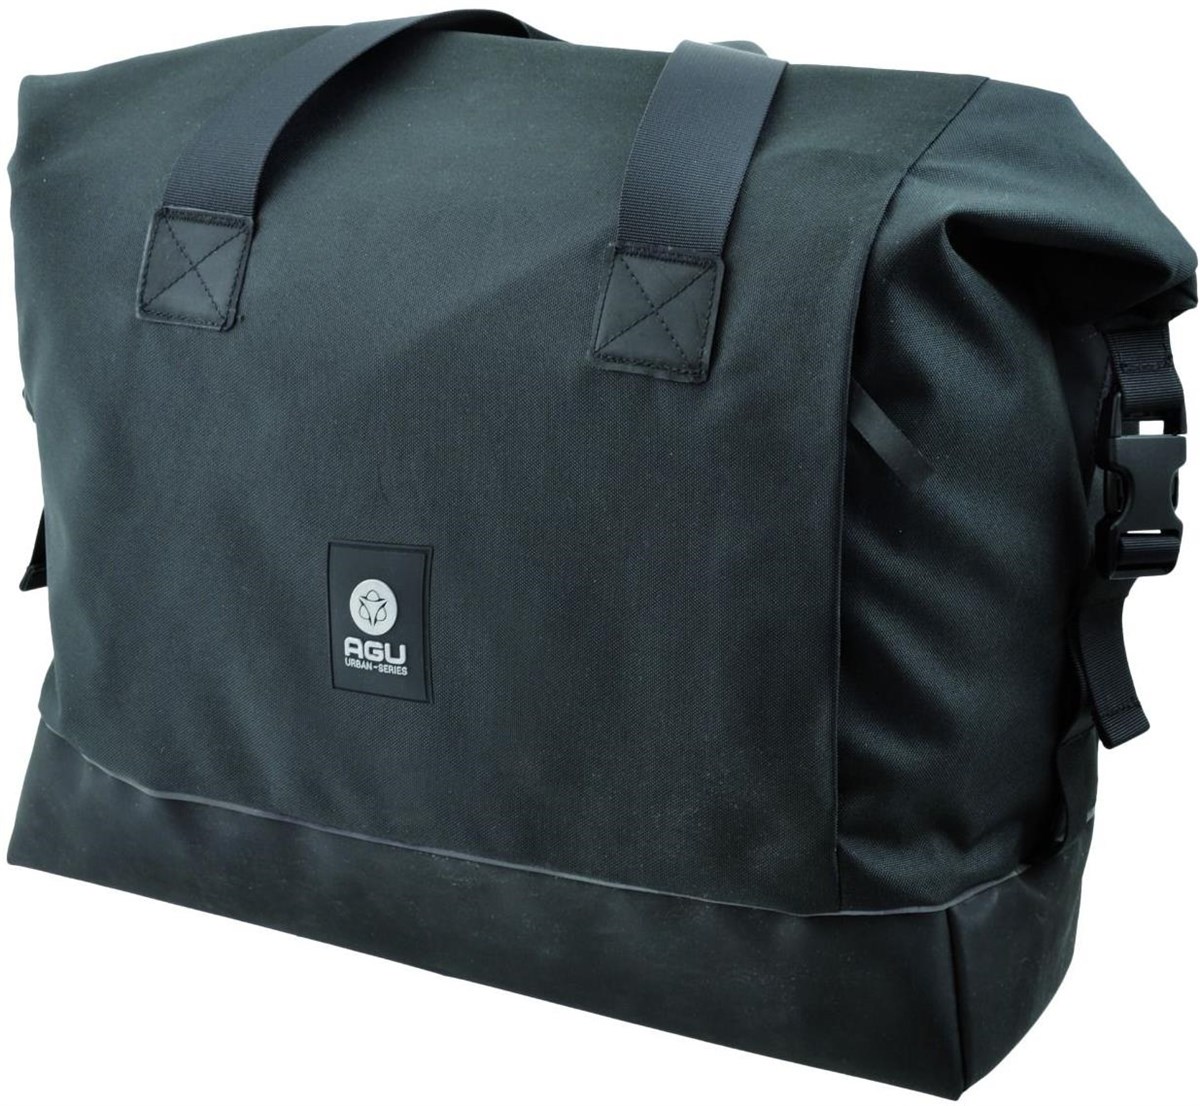 Agu Urban Premium H2O Waterproof Klickfix Office Bag product image